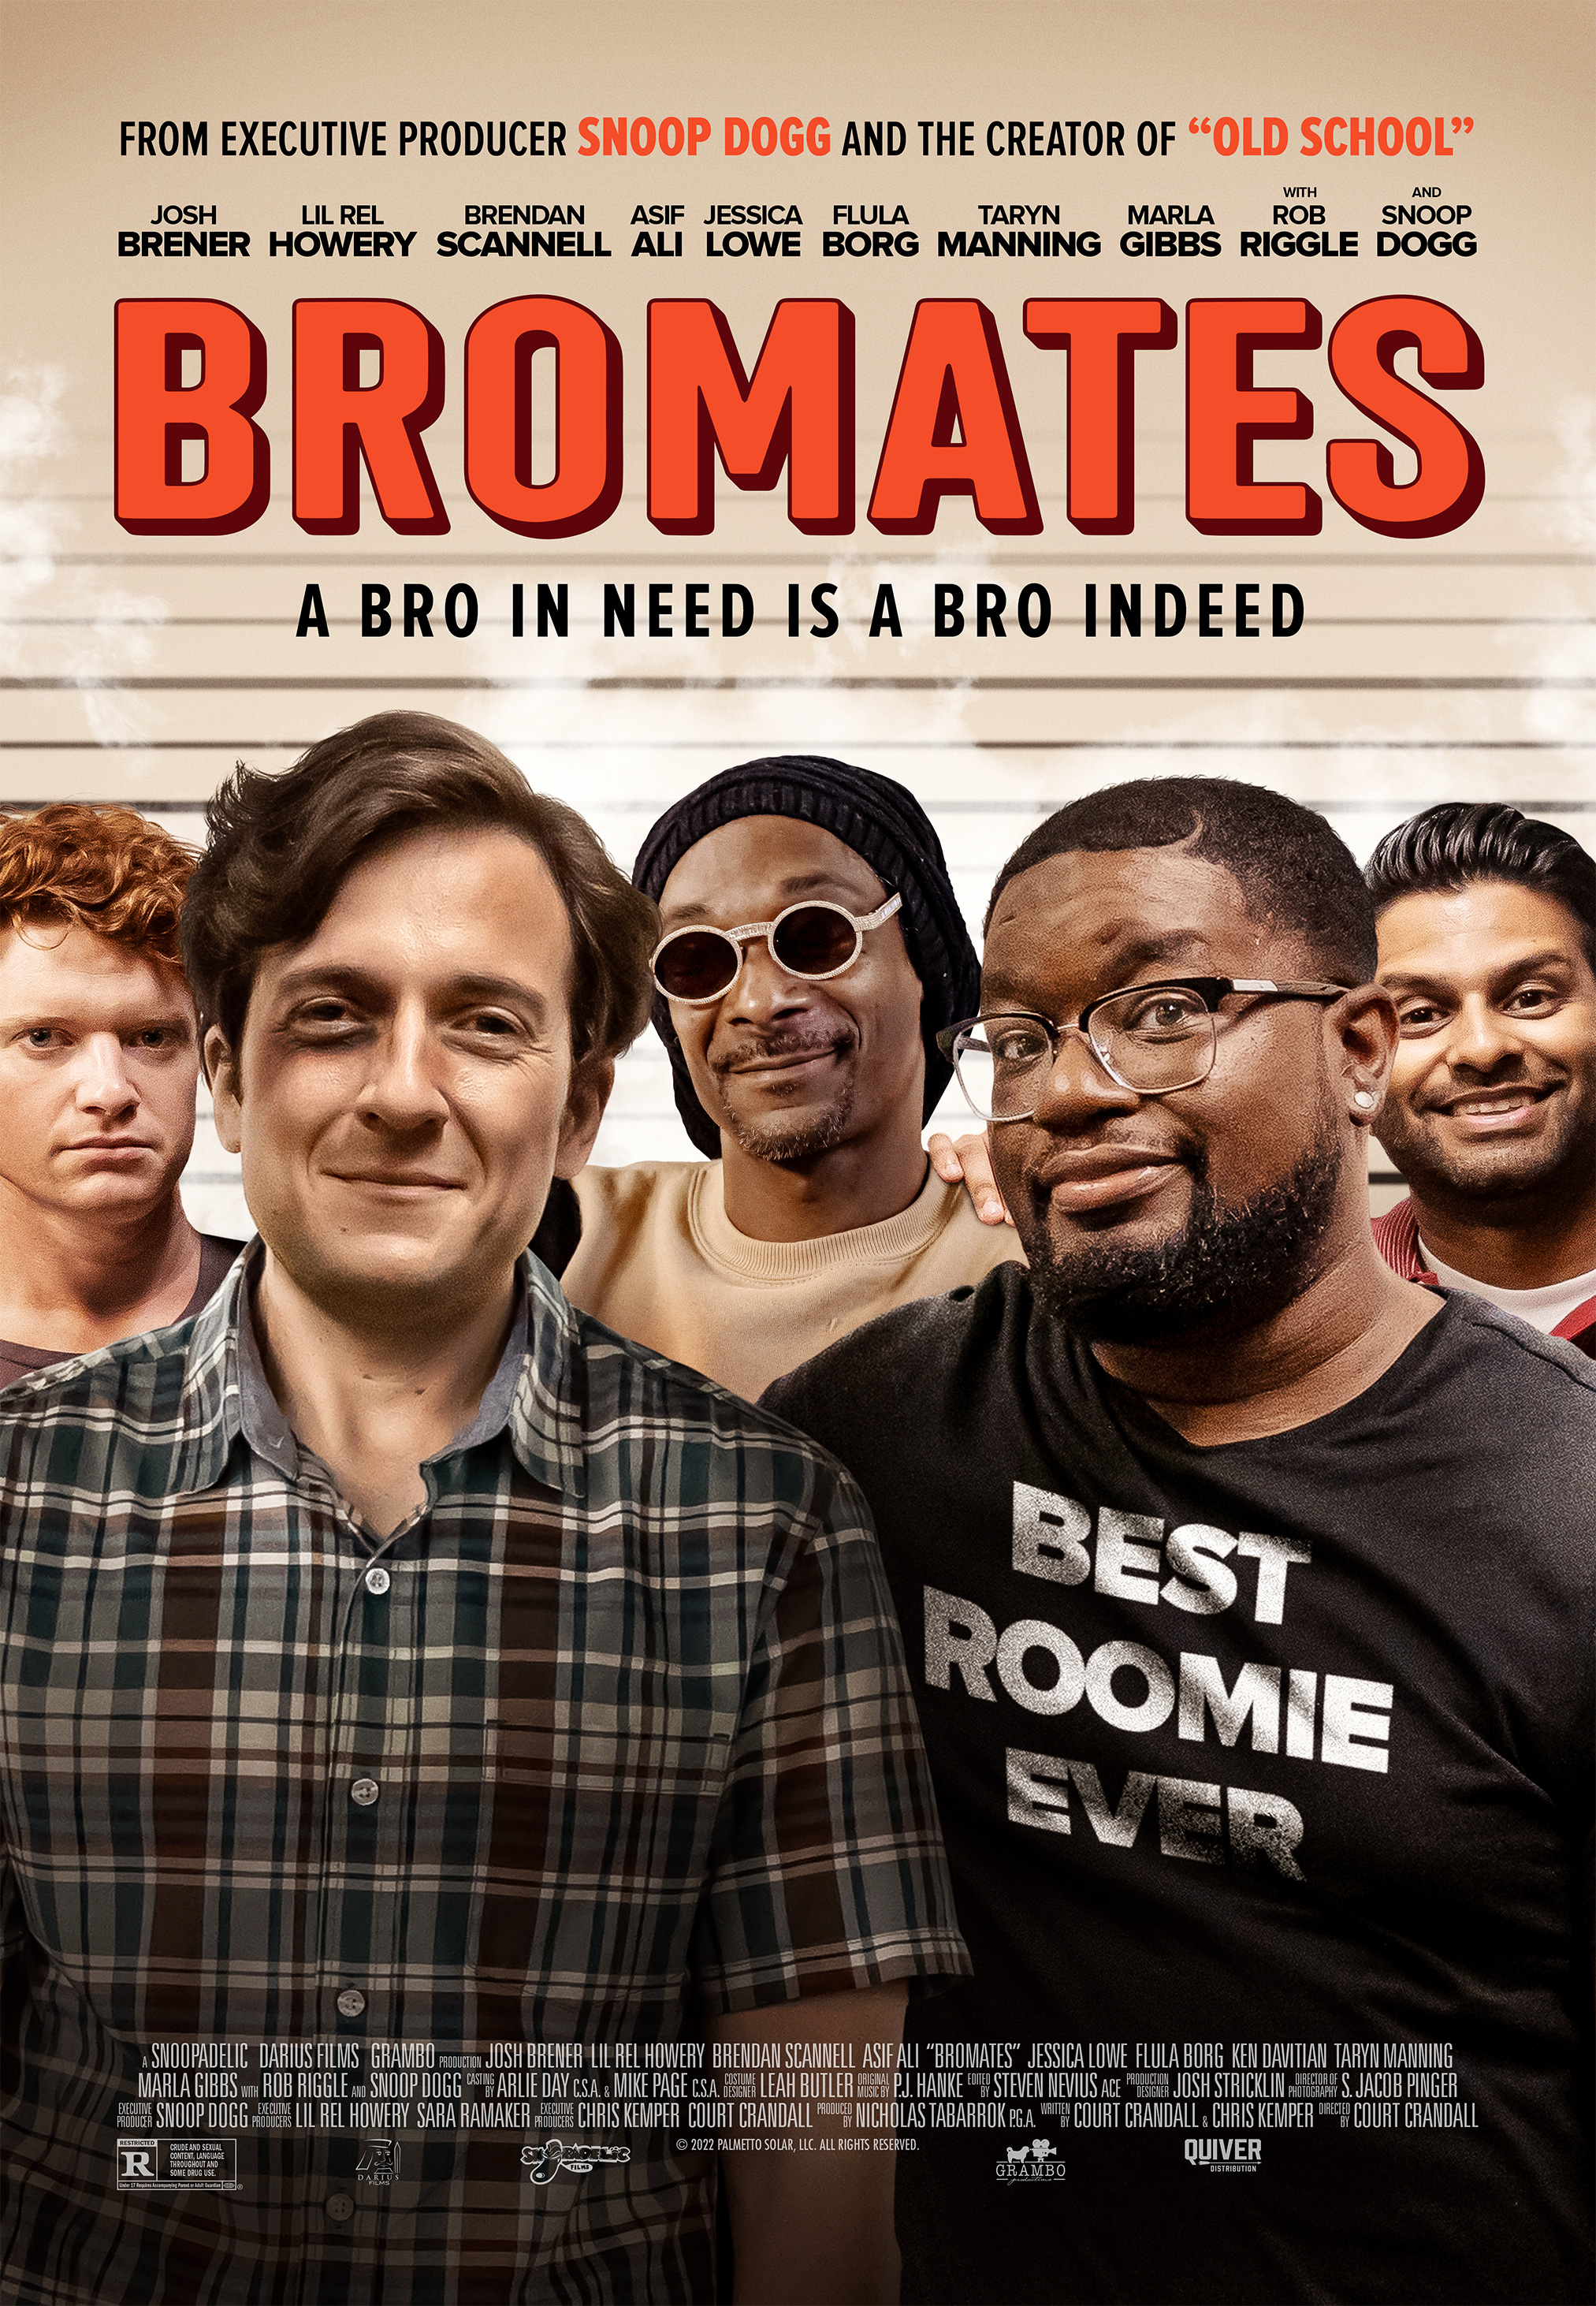 Bromates Trailer Previews Upcoming Buddy Comedy 